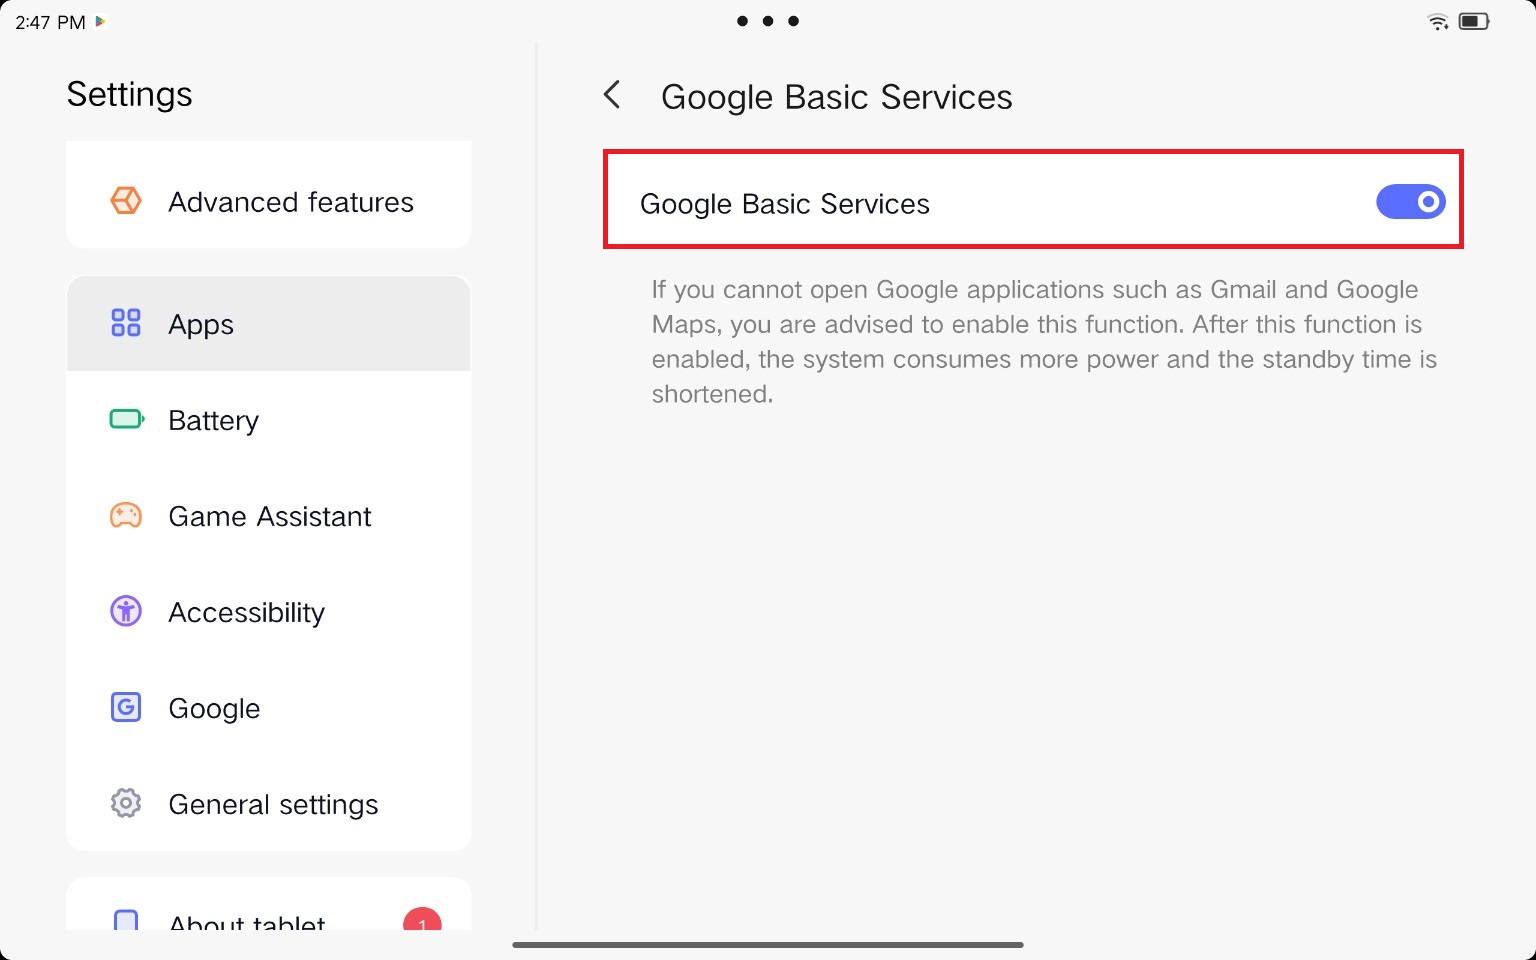 Google Basic Servies